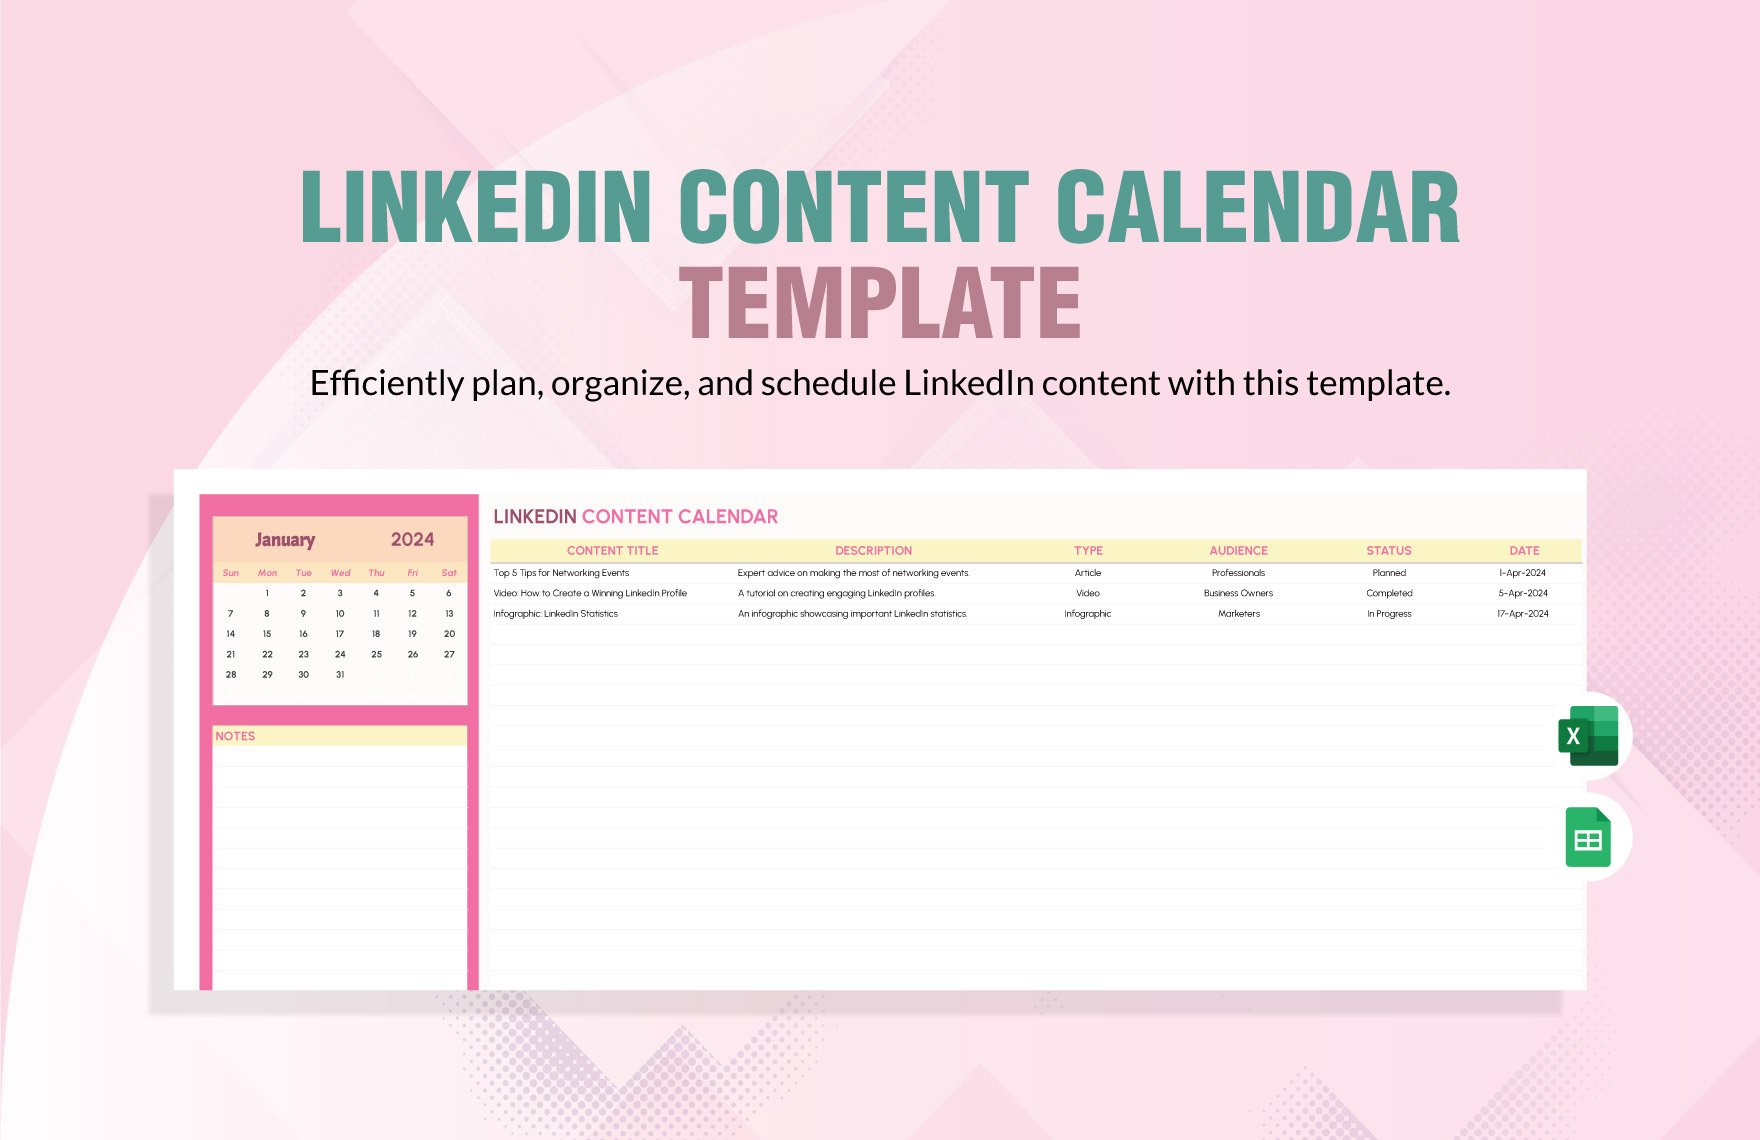 LinkedIn Content Calendar Template in Excel, Google Sheets